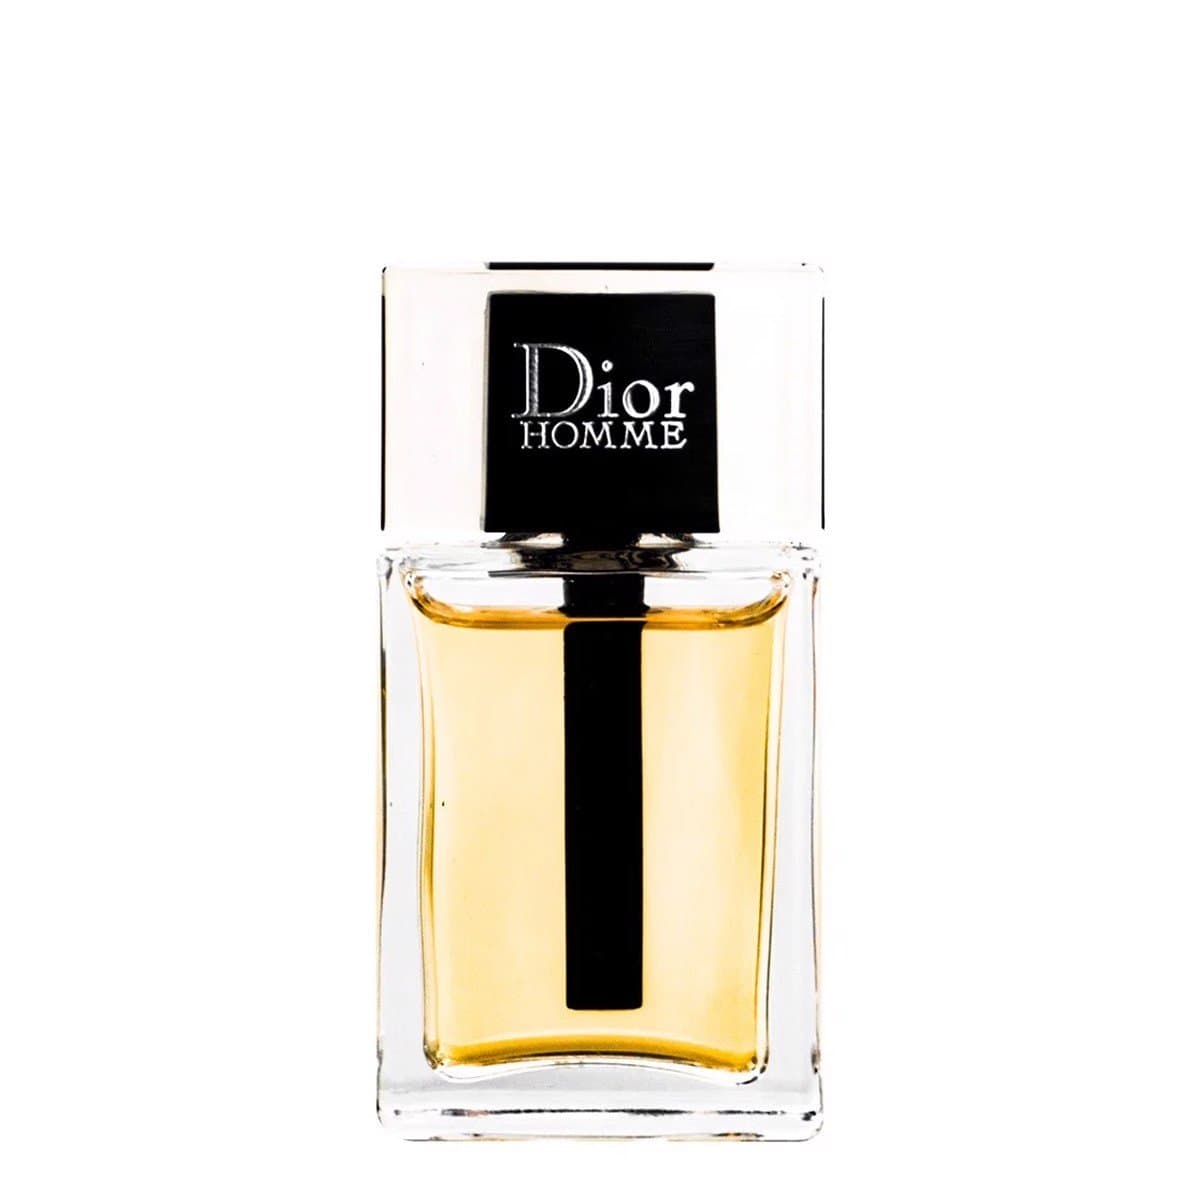 Nước hoa Dior Homme Parfum  Onetone Perfume